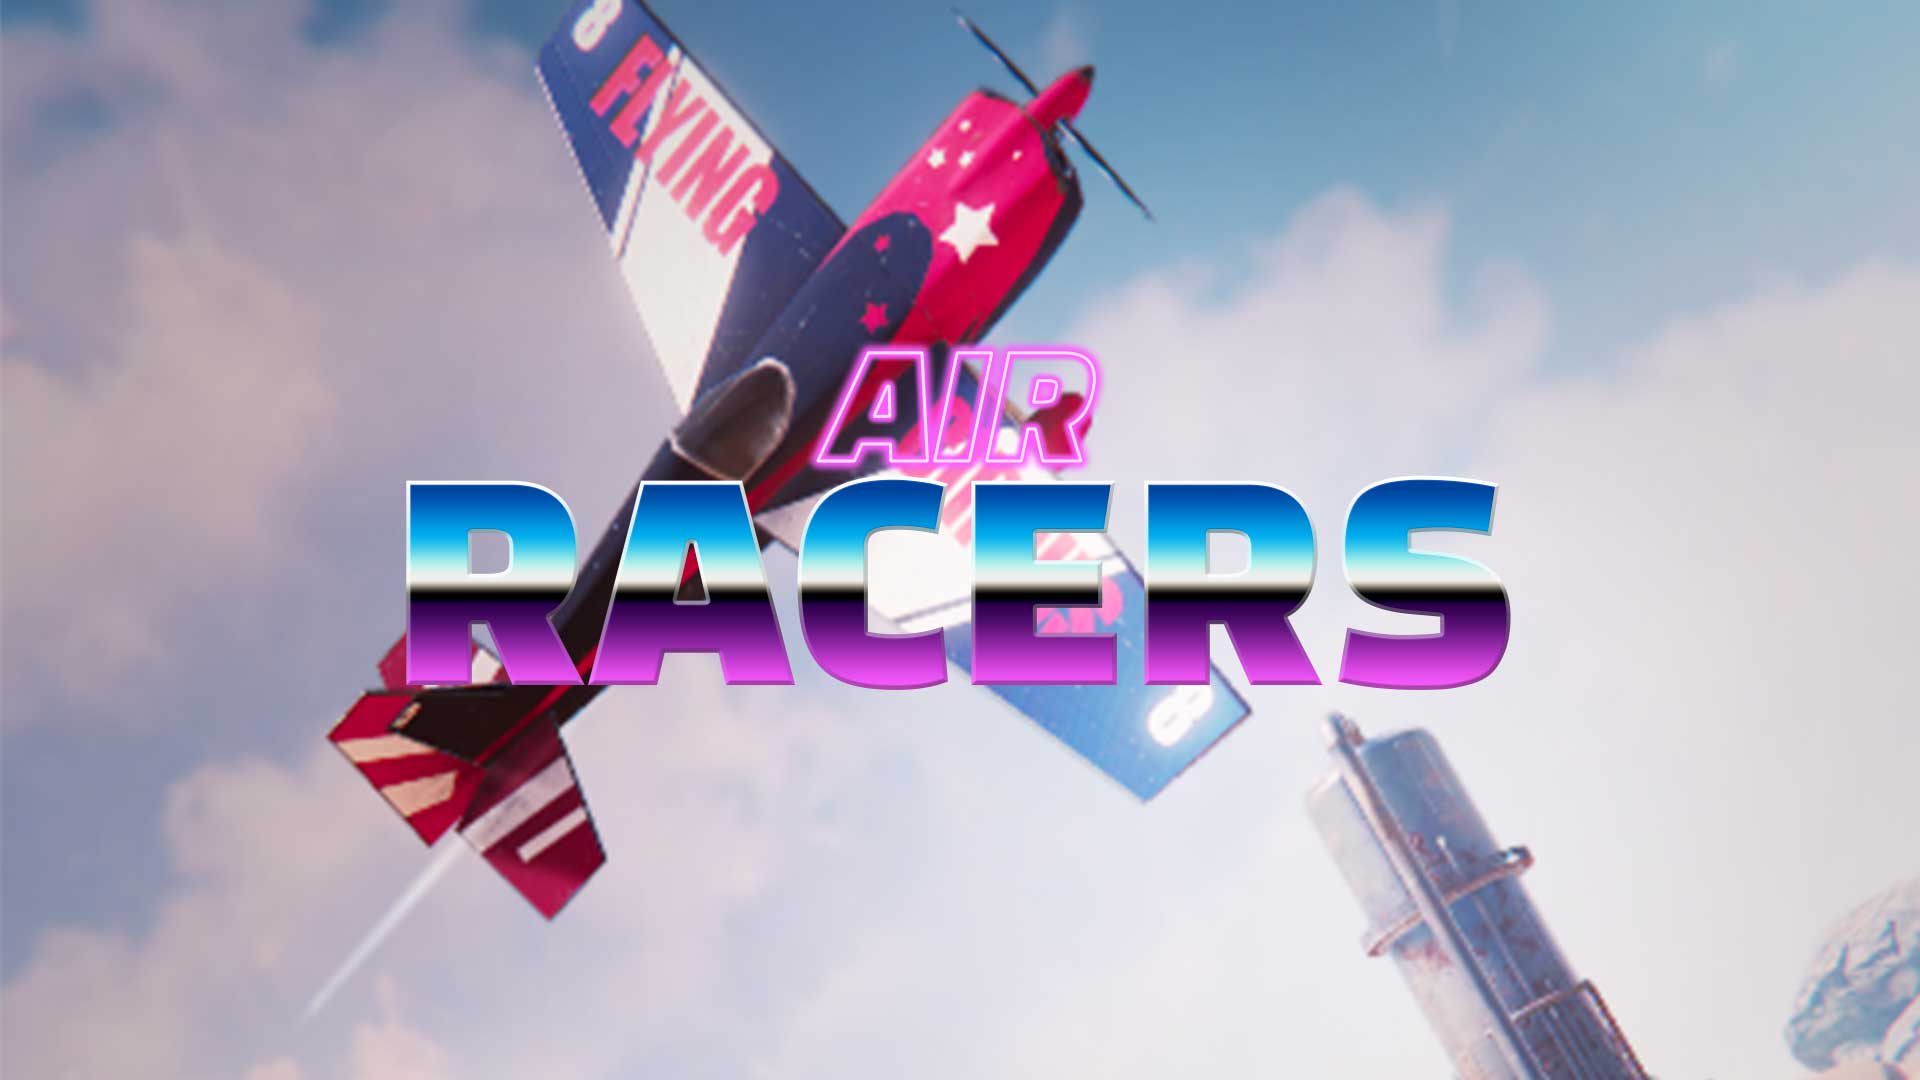 Air Racers